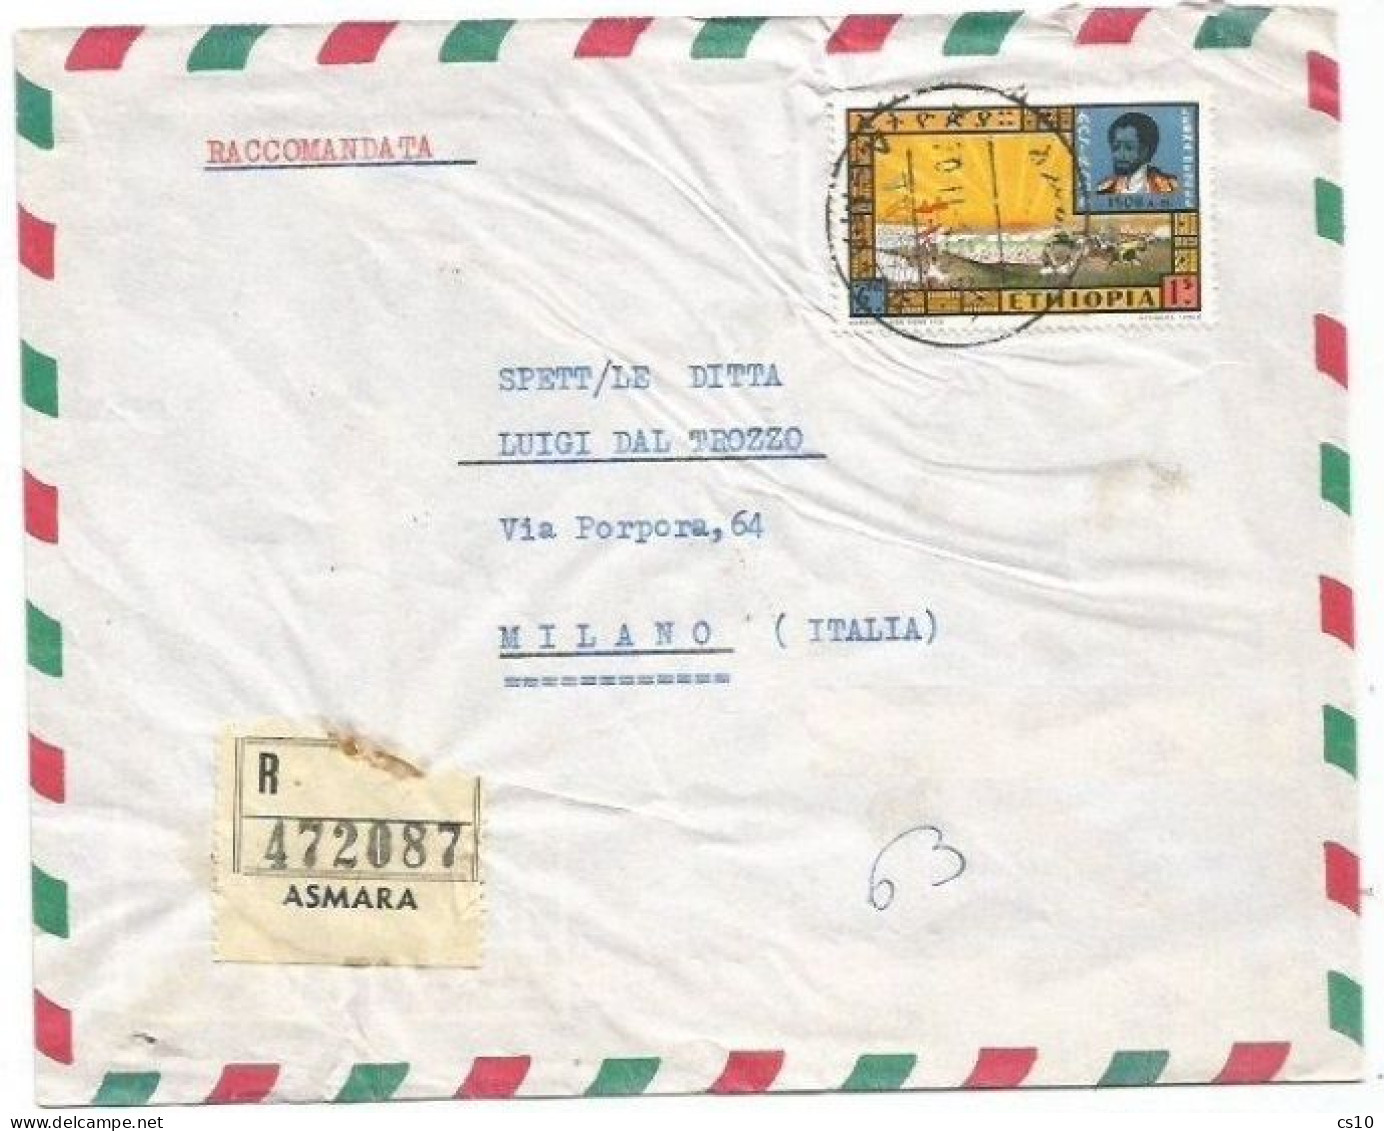 Ethiopia Airmail Registered Commerce Cover Asmara 30nov1966 To Italy With Lebna Dengel  E$ 1 Solo Franking - Ethiopia